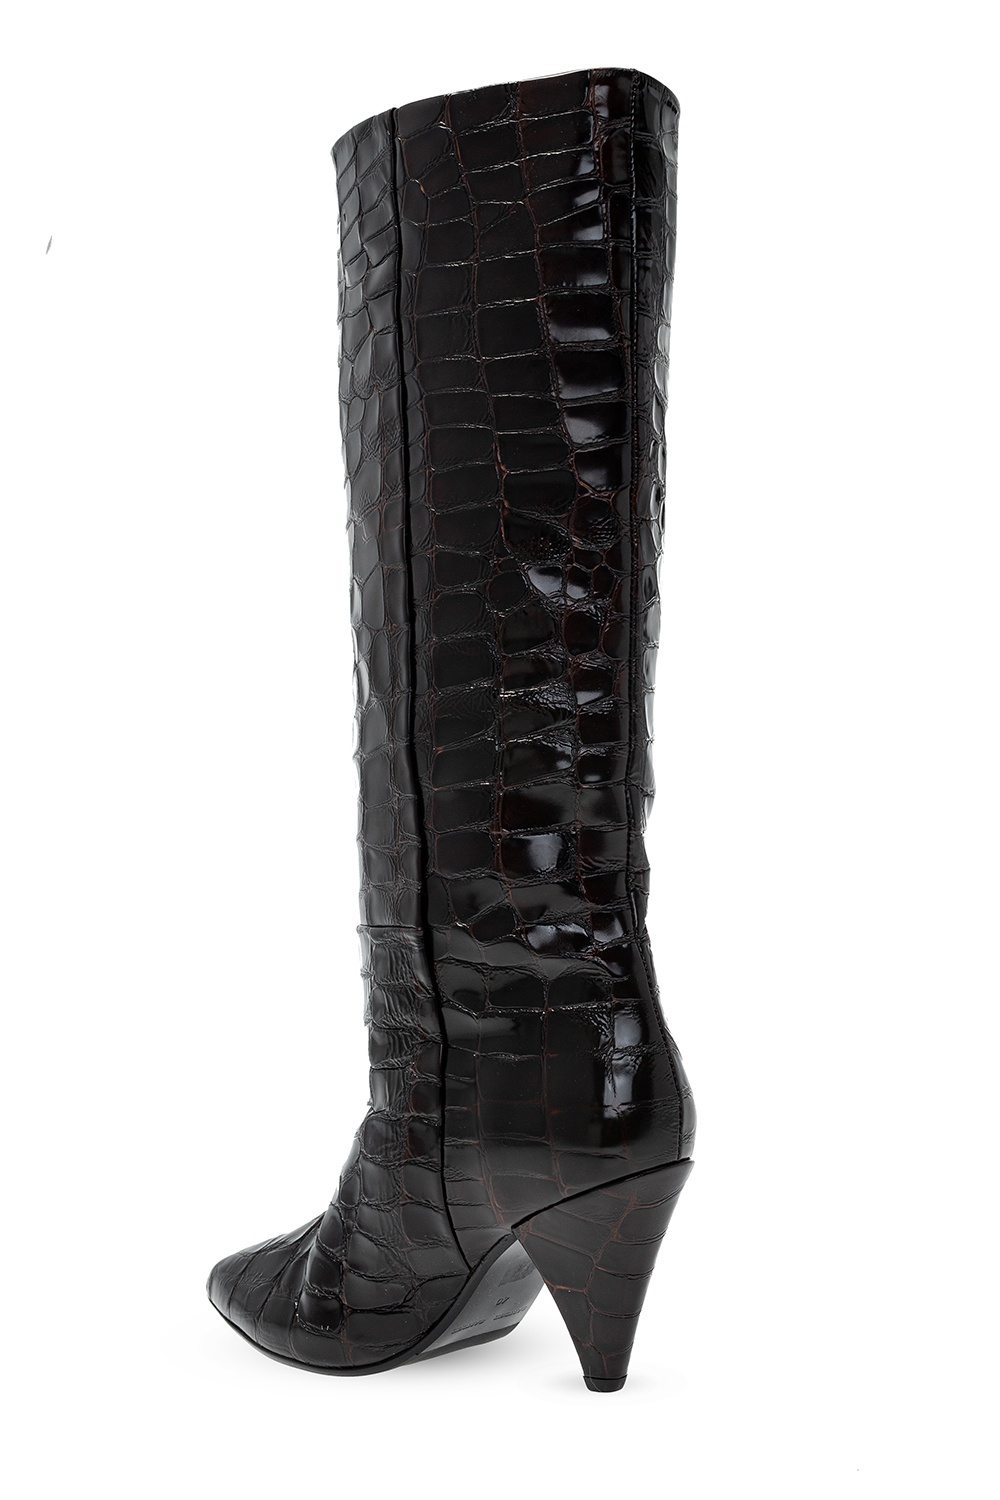 Samsøe Samsøe ‘Myrassa’ heeled knee-high boots